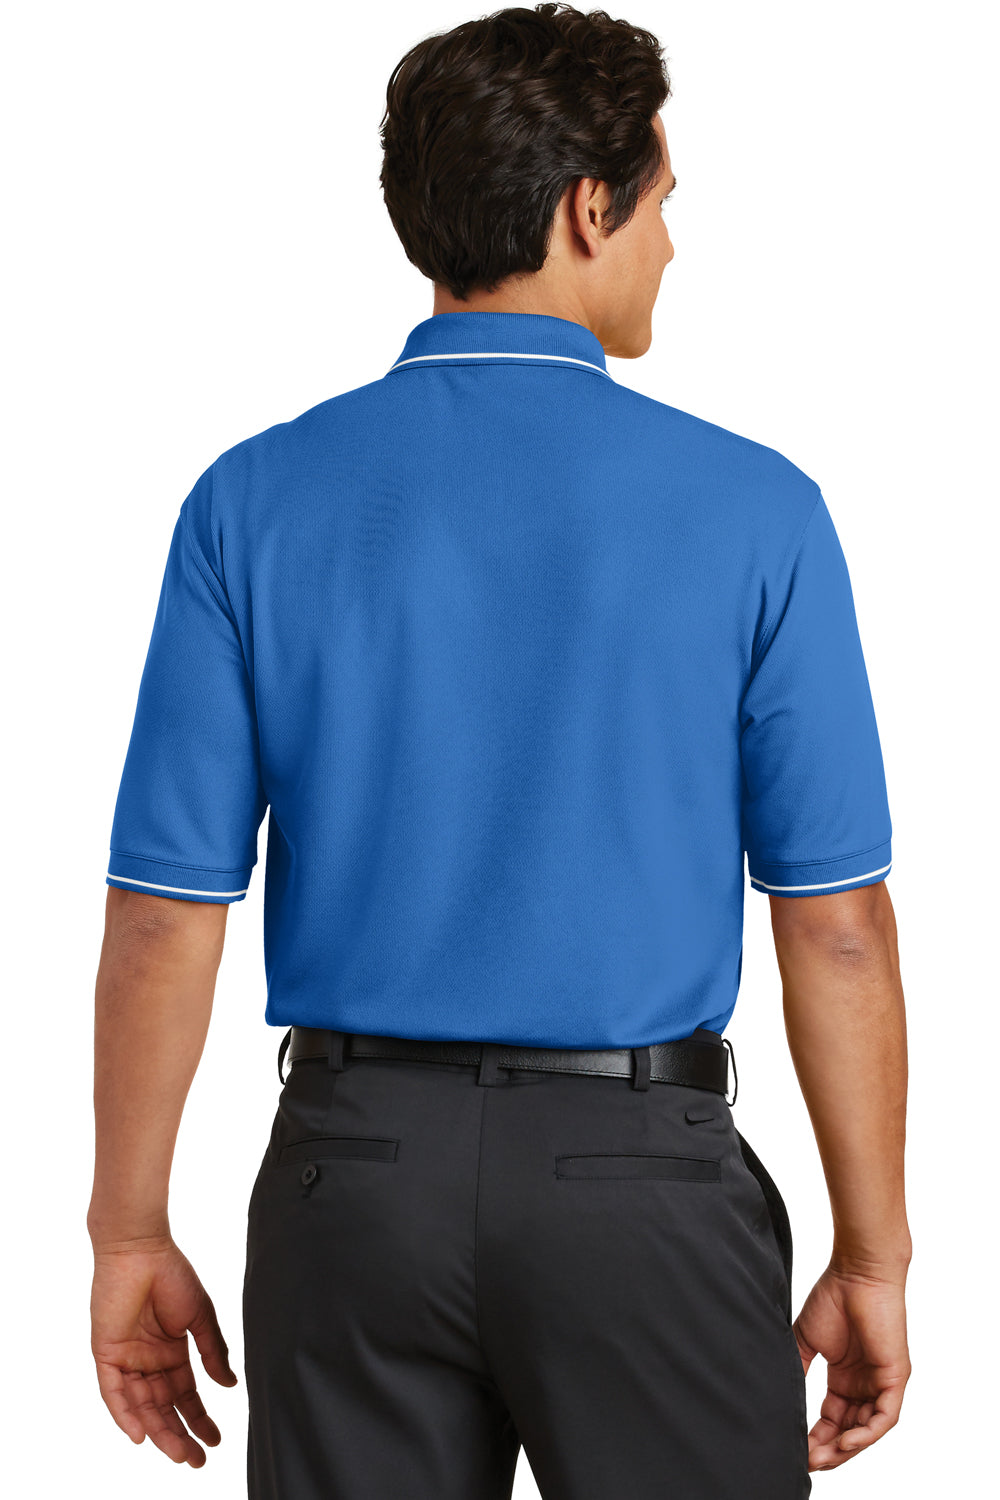 Nike 319966 Mens Classic Dri-Fit Moisture Wicking Short Sleeve Polo Shirt Pacific Blue Back